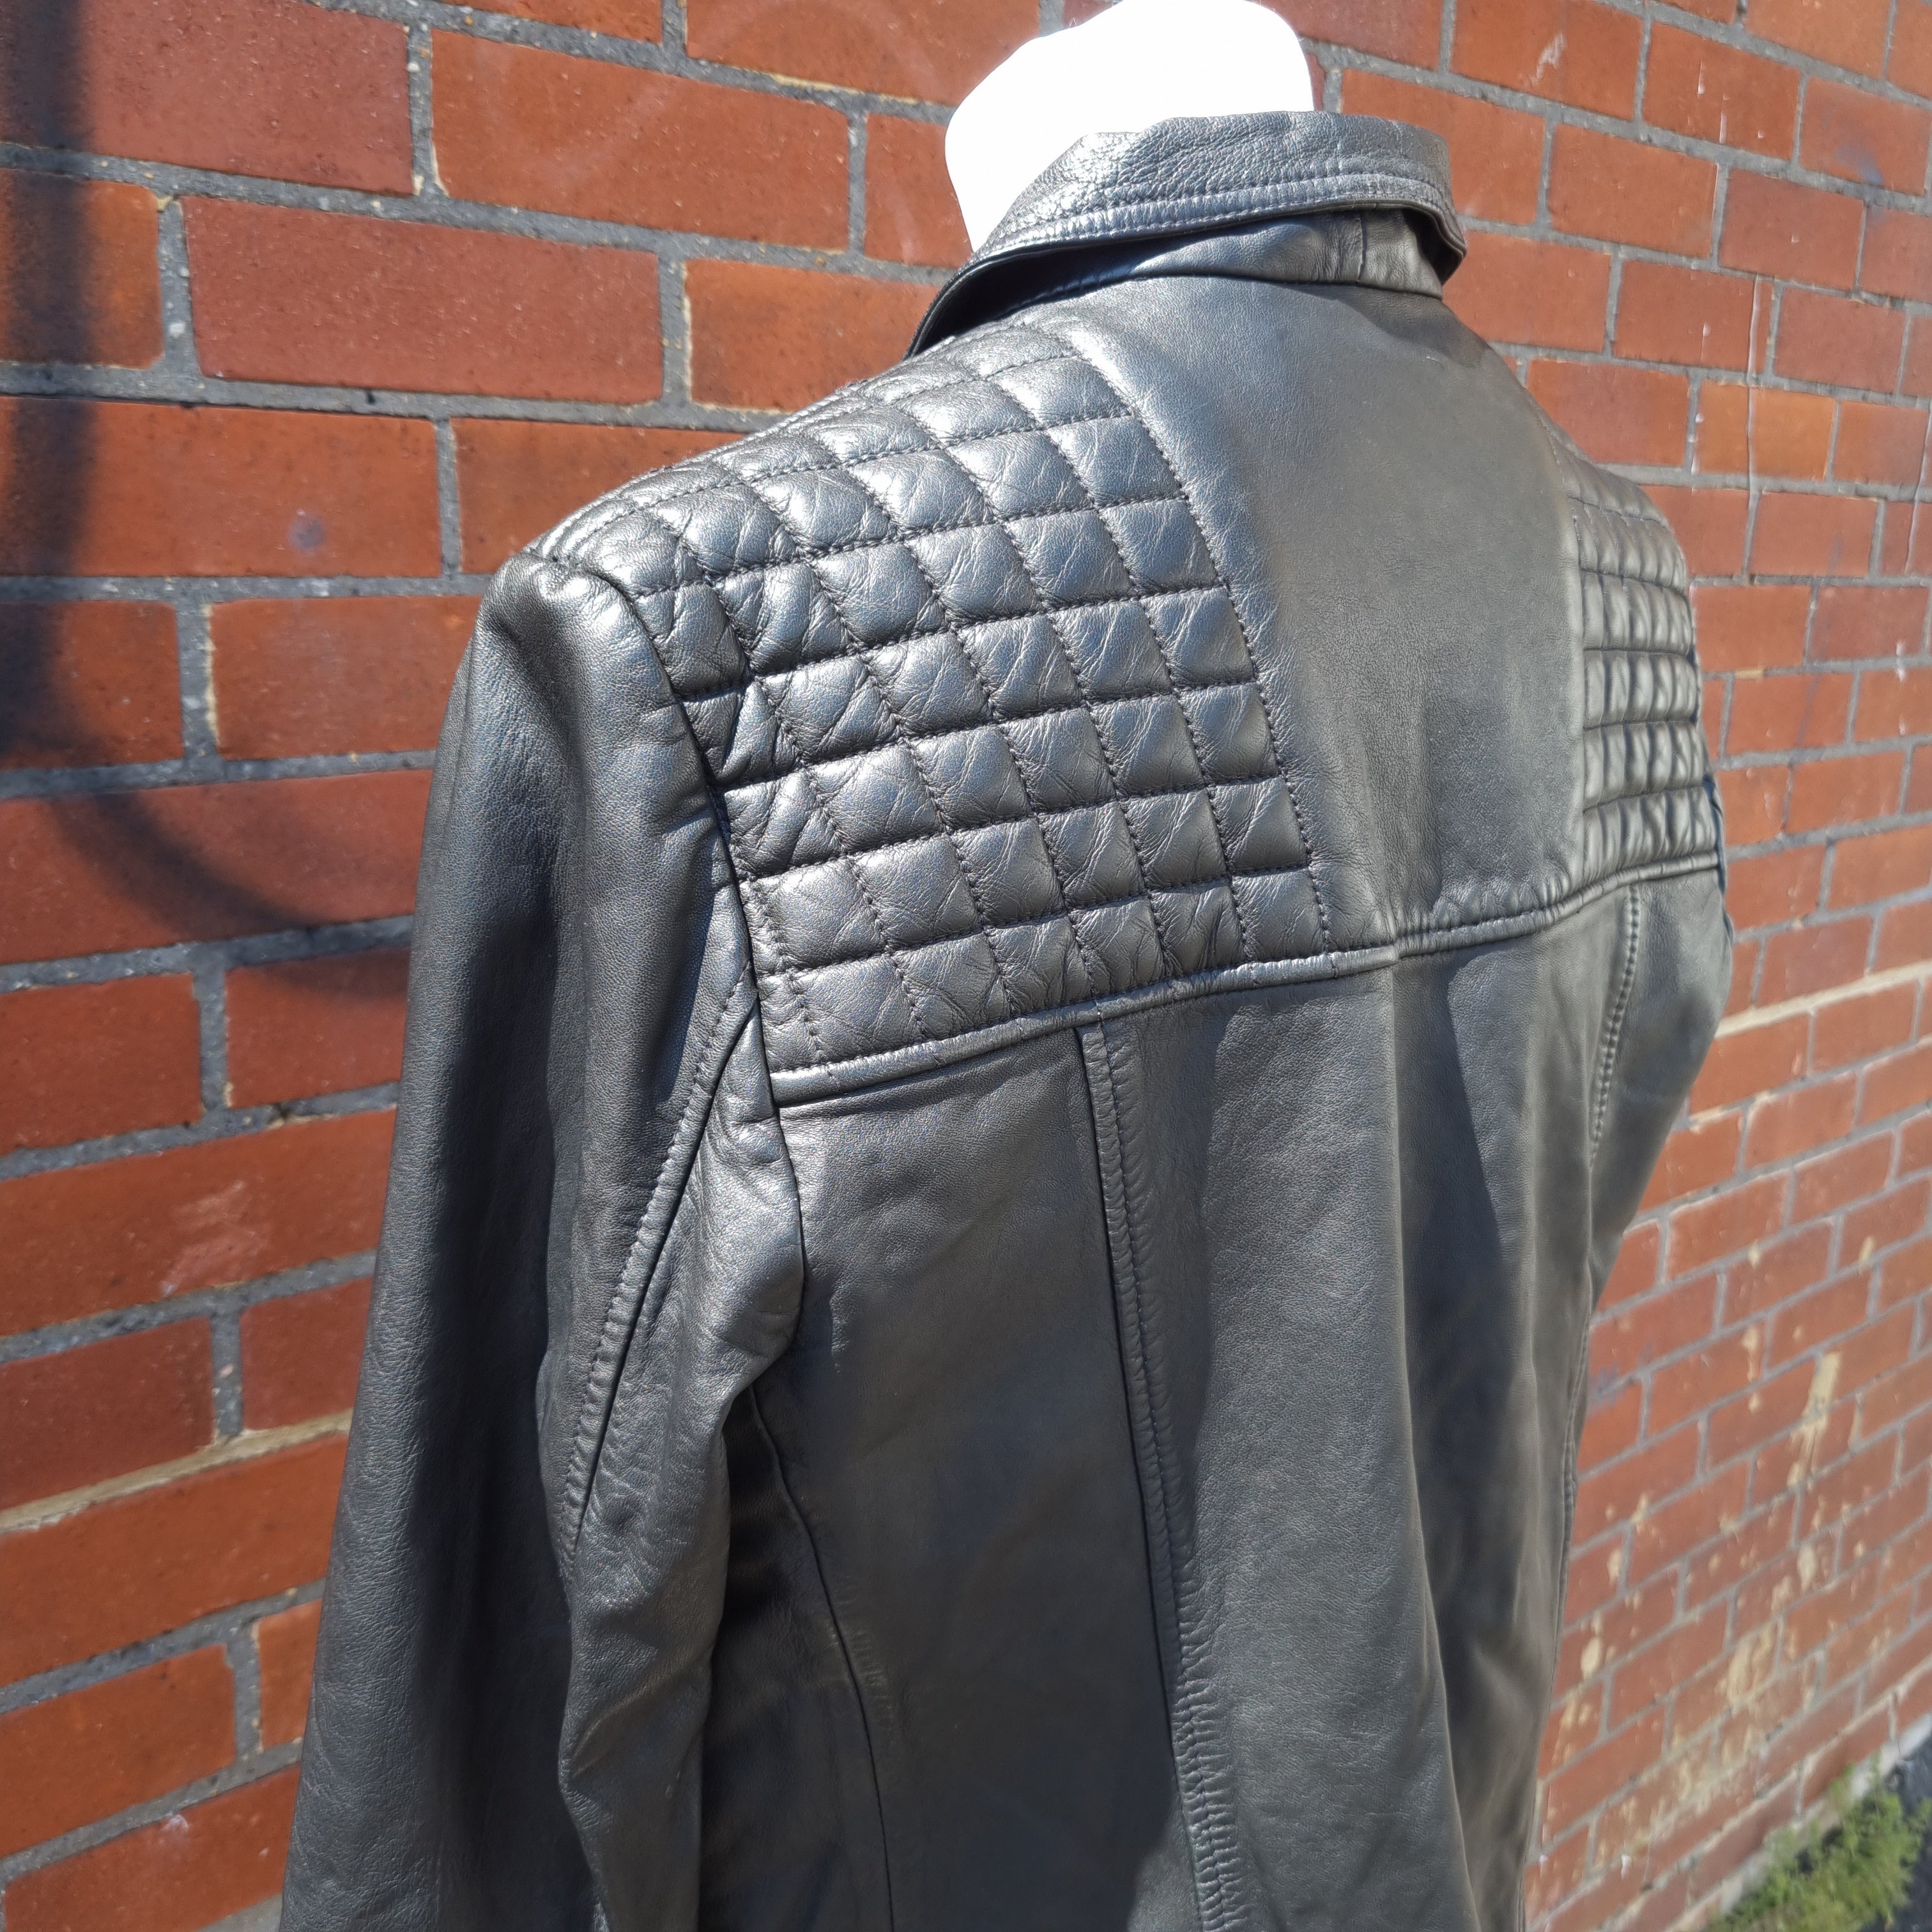 NEW AllSaints Lyme Leather Jacket in Black Size XL #SJ62 | eBay